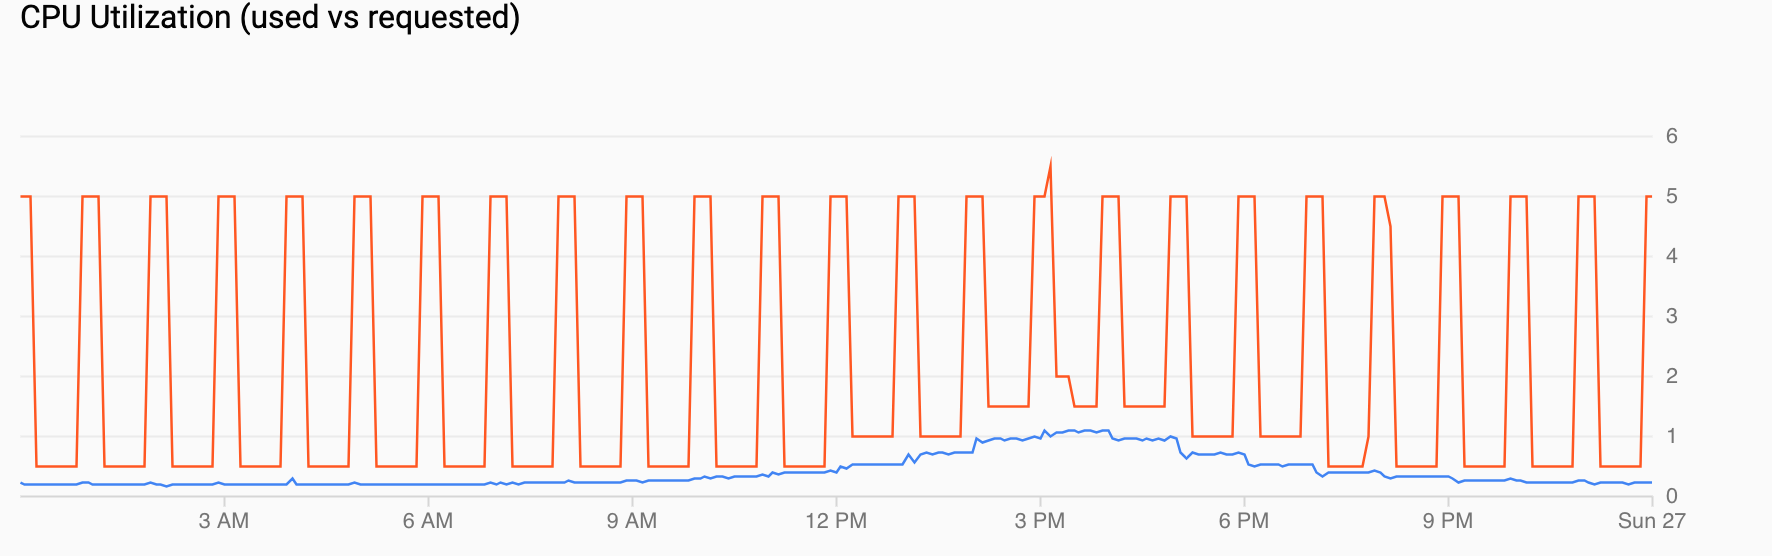 Grafik pemakaian CPU, menunjukkan permintaan yang meningkat sepanjang hari hingga pukul 16.00, lalu menurun.